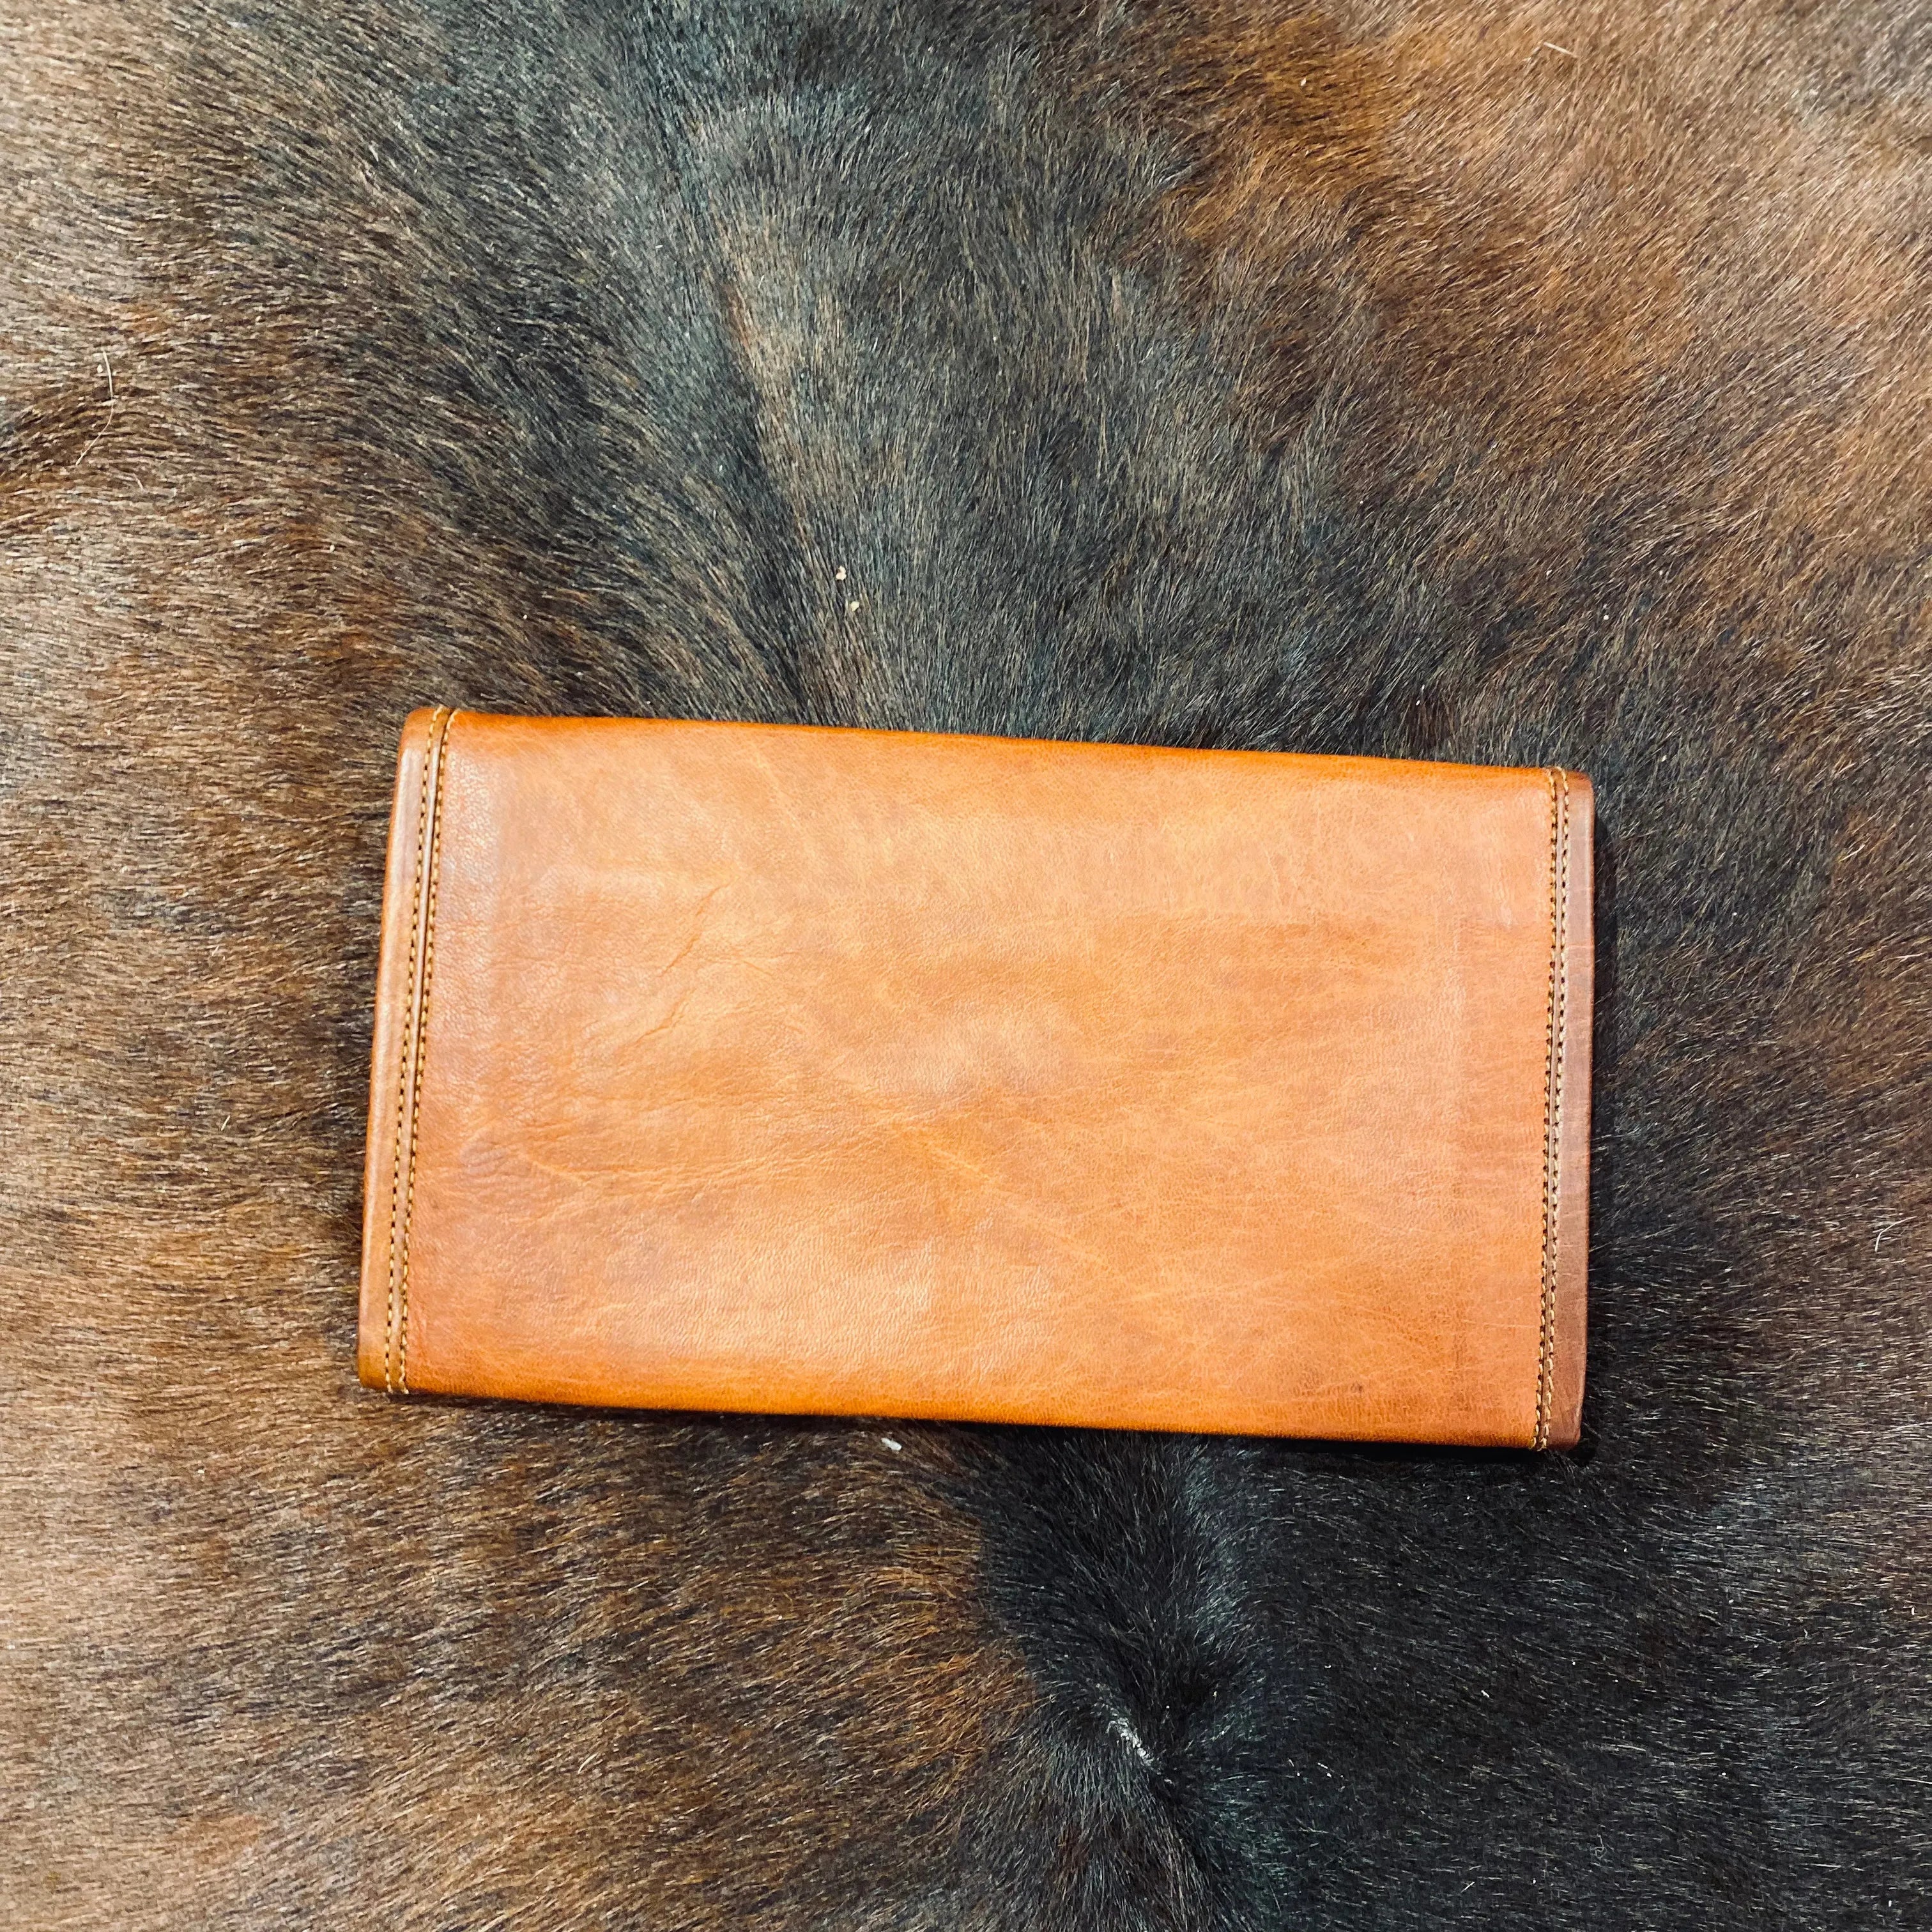 Leather wallet midi size 